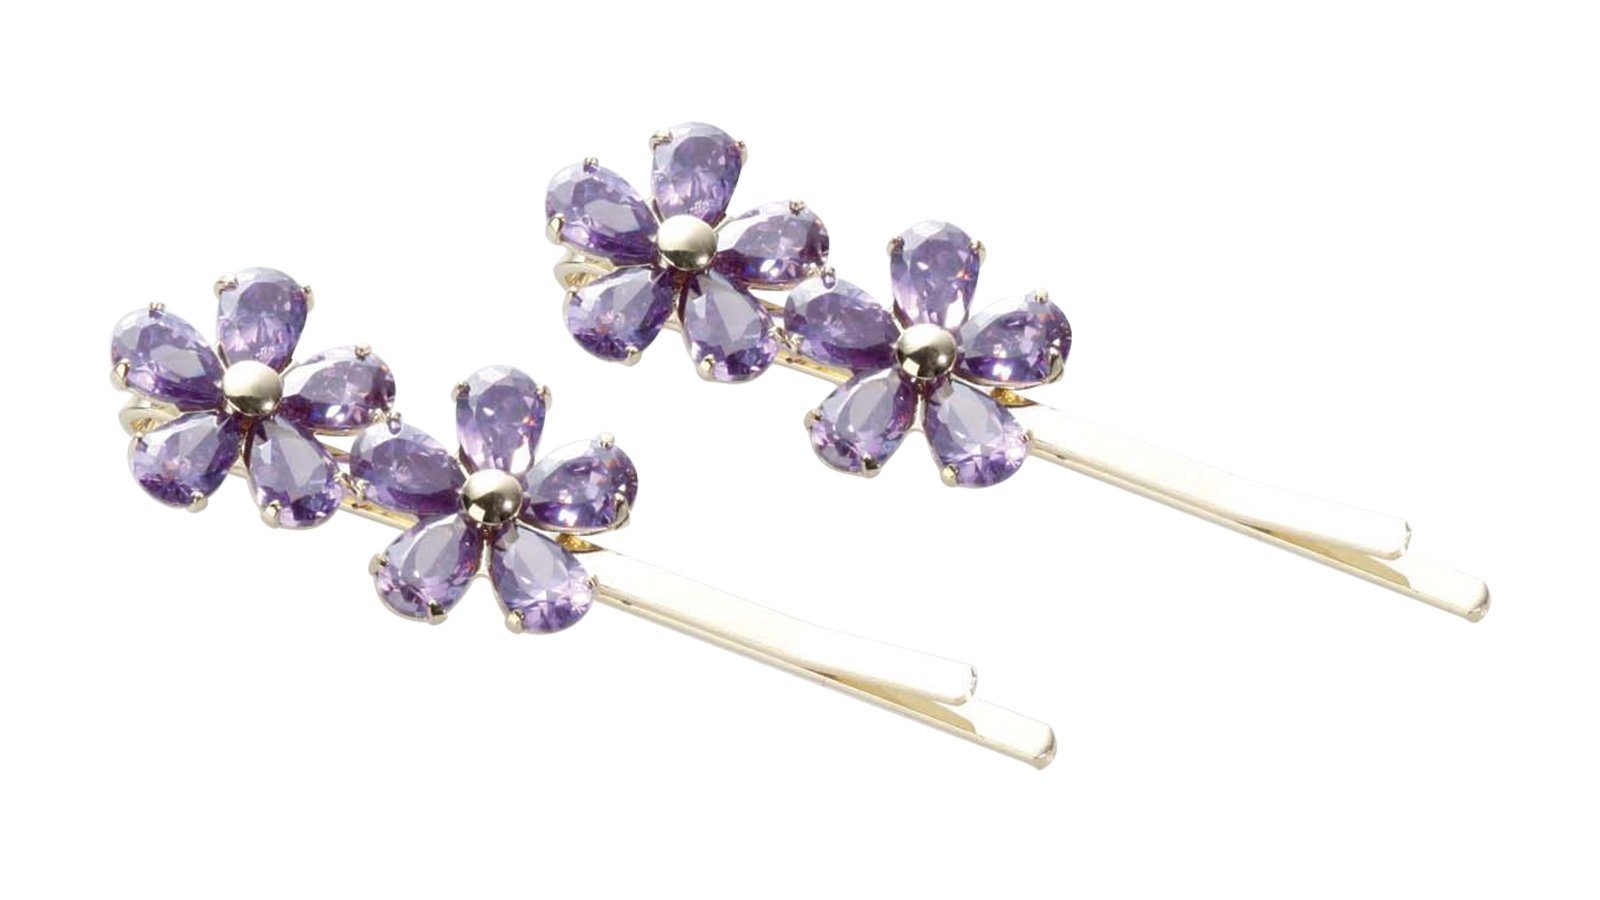 St. Zirkonen, Haarschieber-Set Haargummi Kosmetex 2 violett Haarnadeln mit Blütenförmige